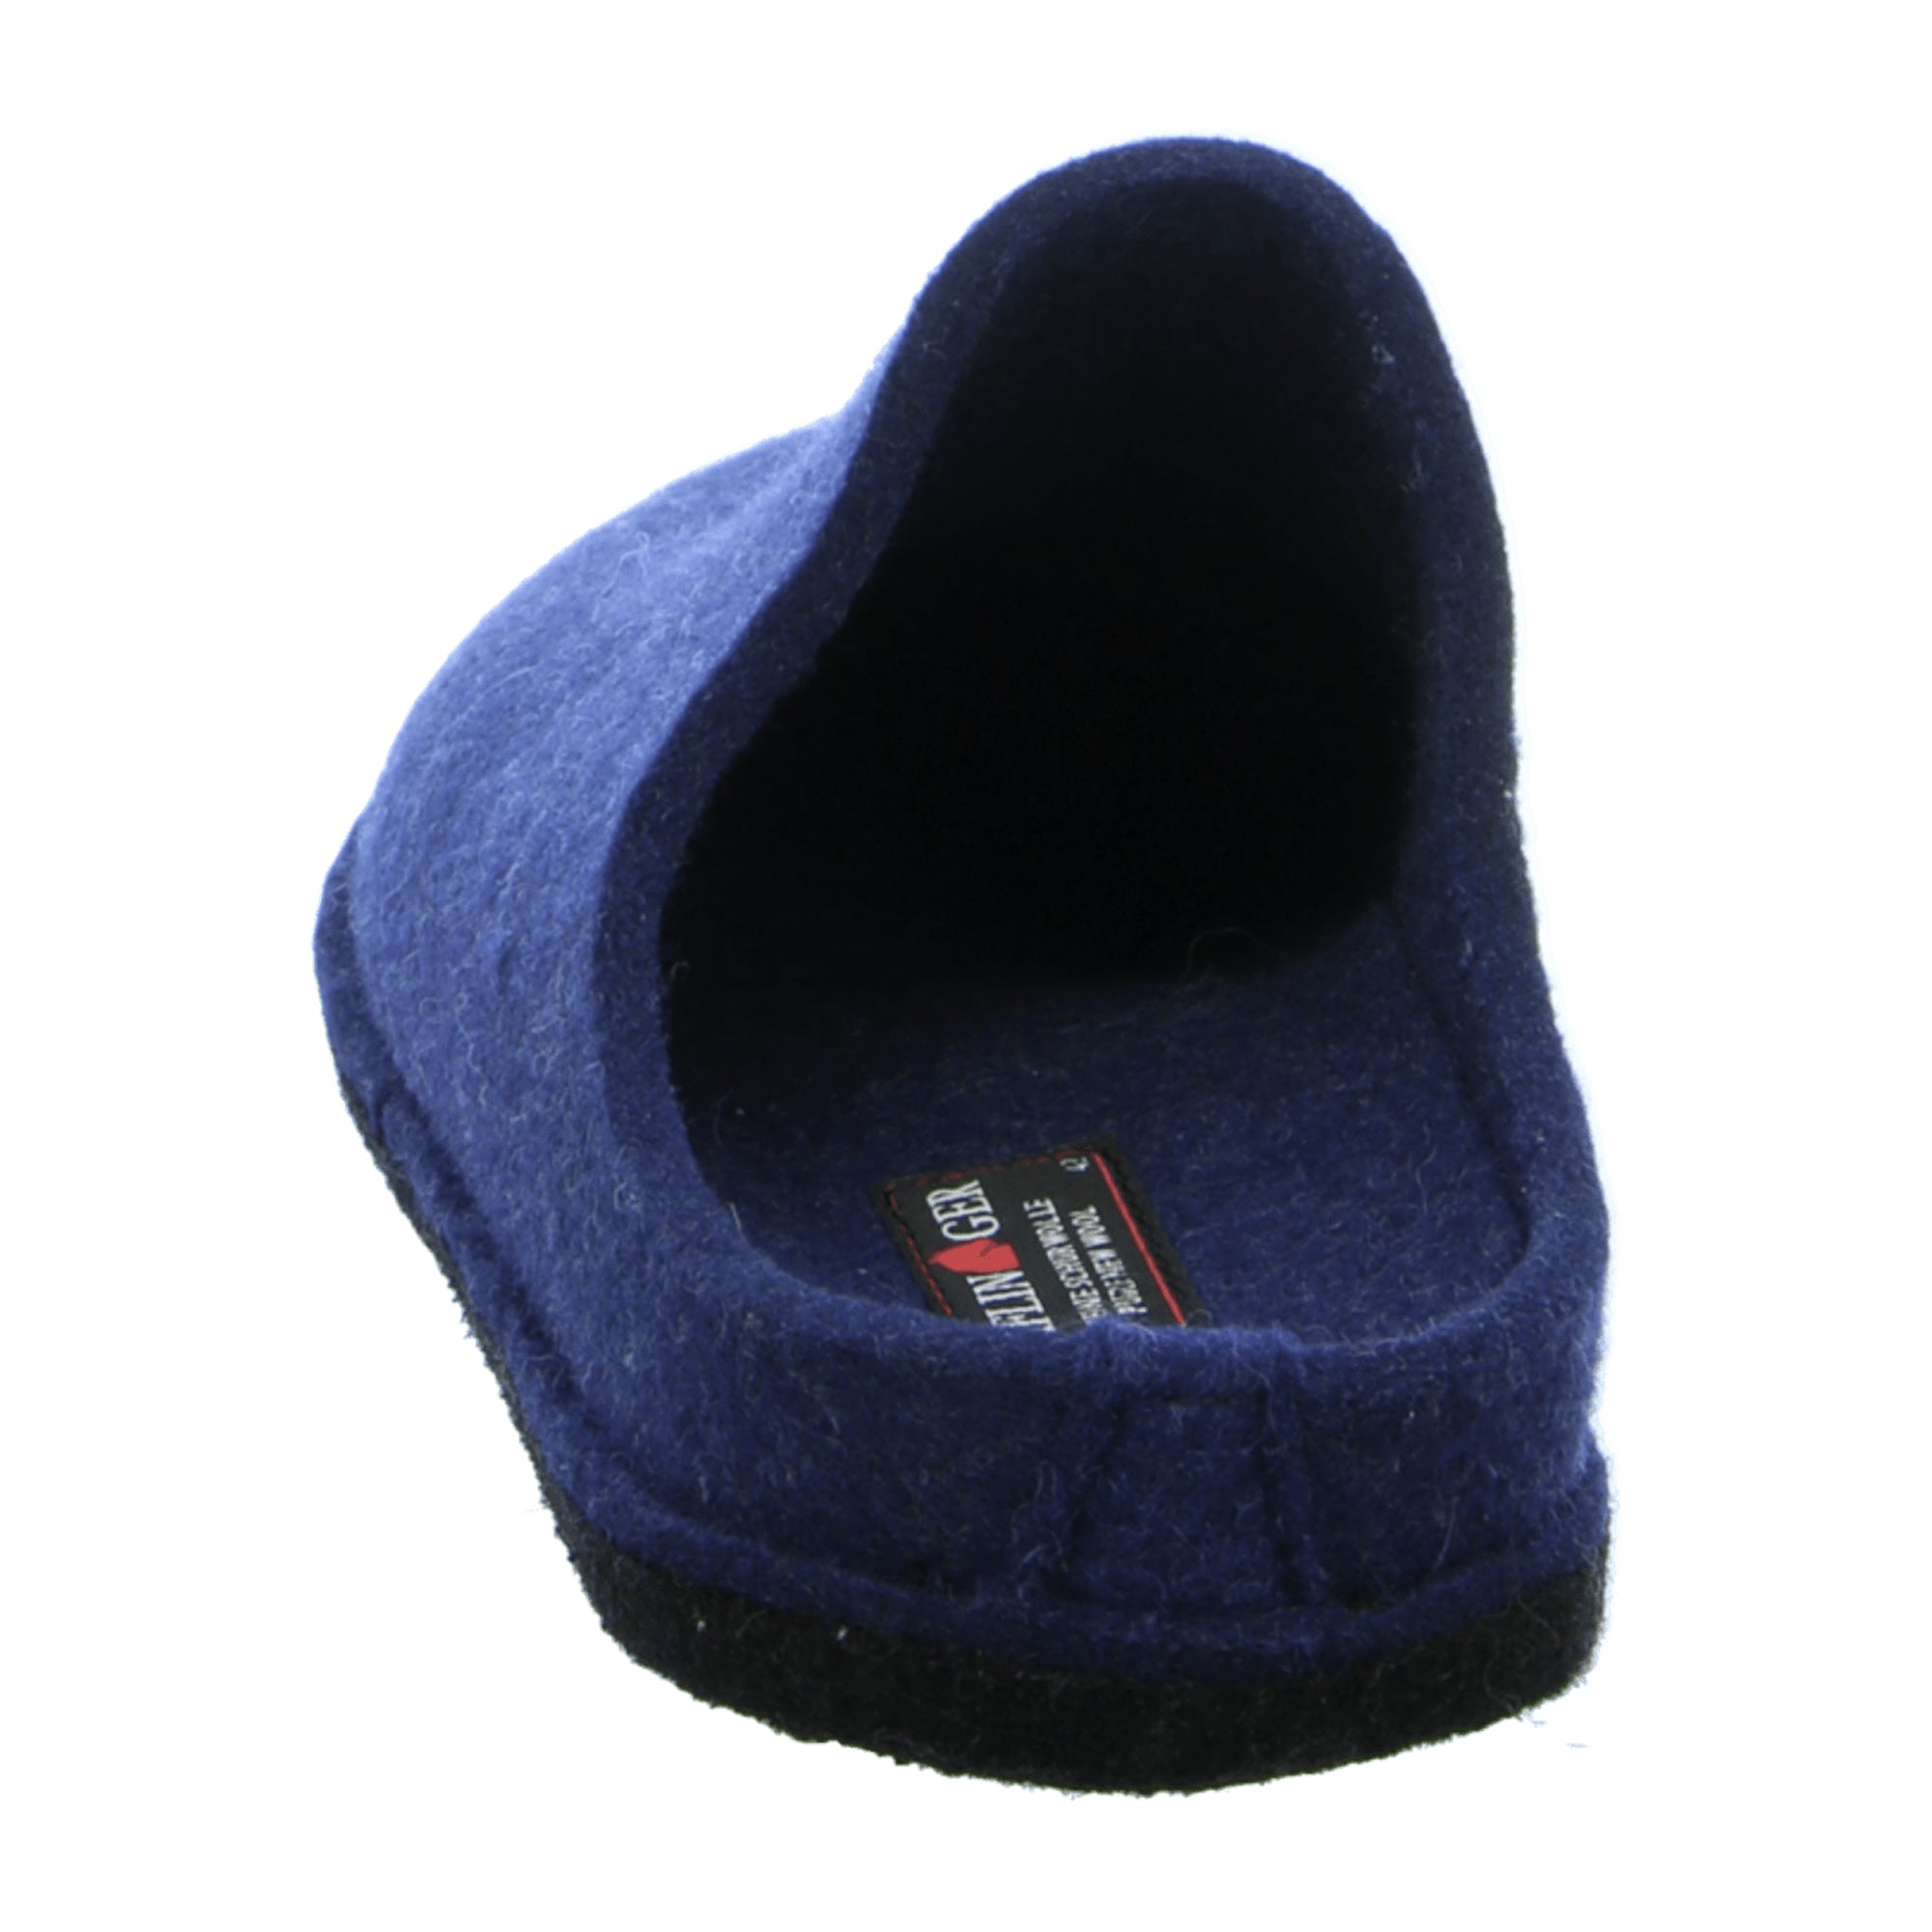 Haflinger Flair Soft Men's Slippers, Soft Wool, Durable - Blue